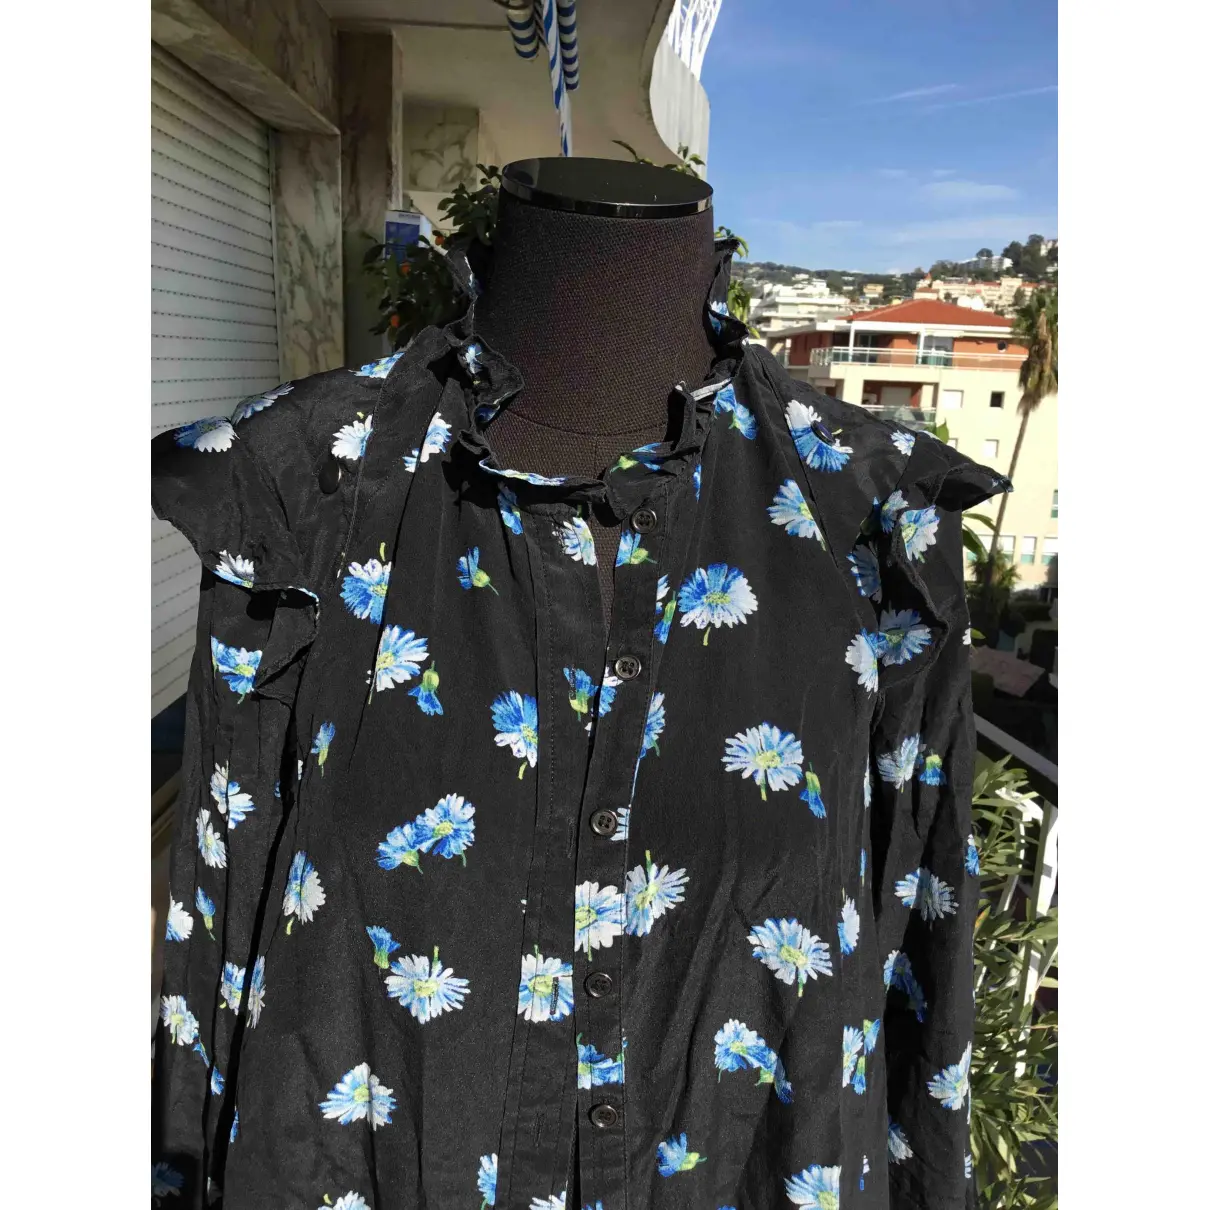 Buy The Kooples Spring Summer 2020 silk shirt online